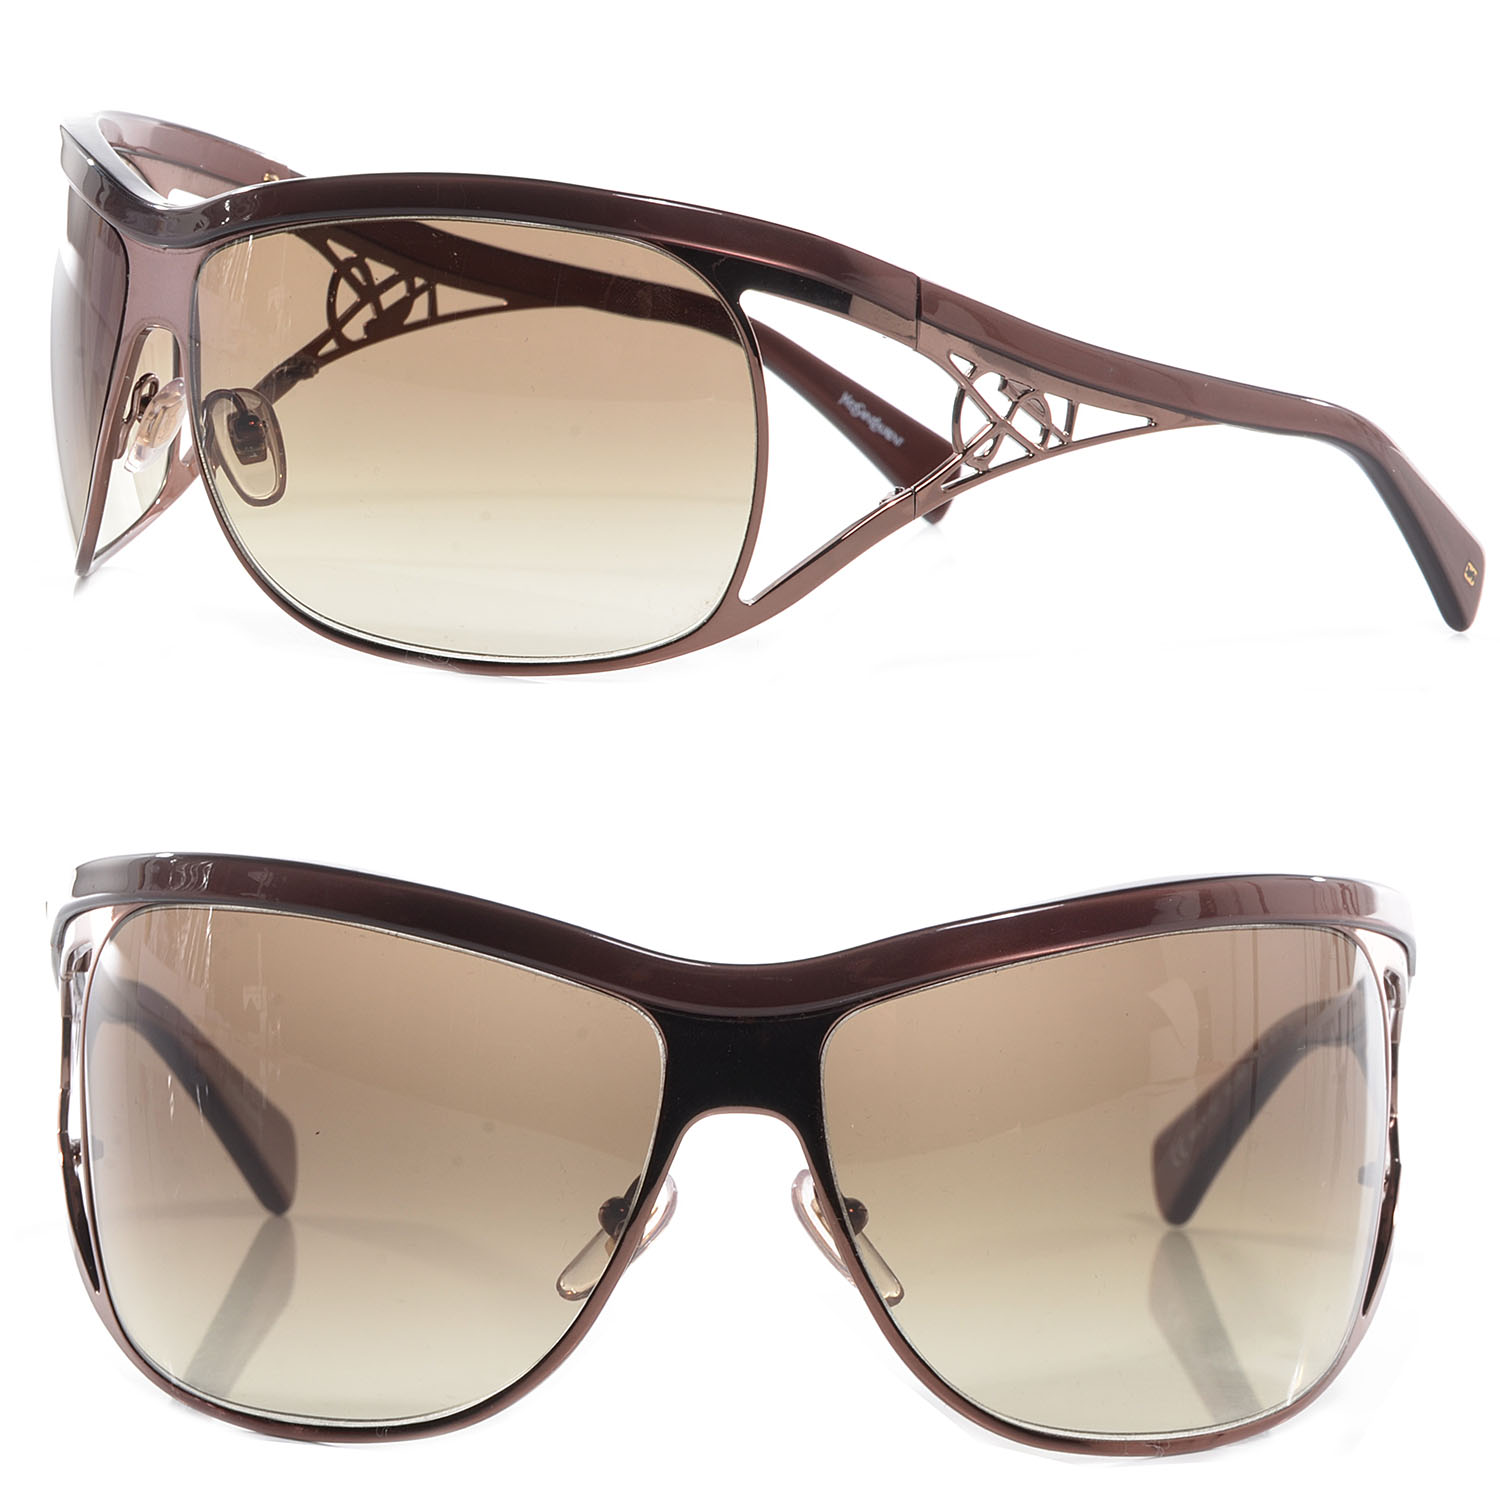 Yves Saint Laurent Sunglasses Womens - fritzydesigns